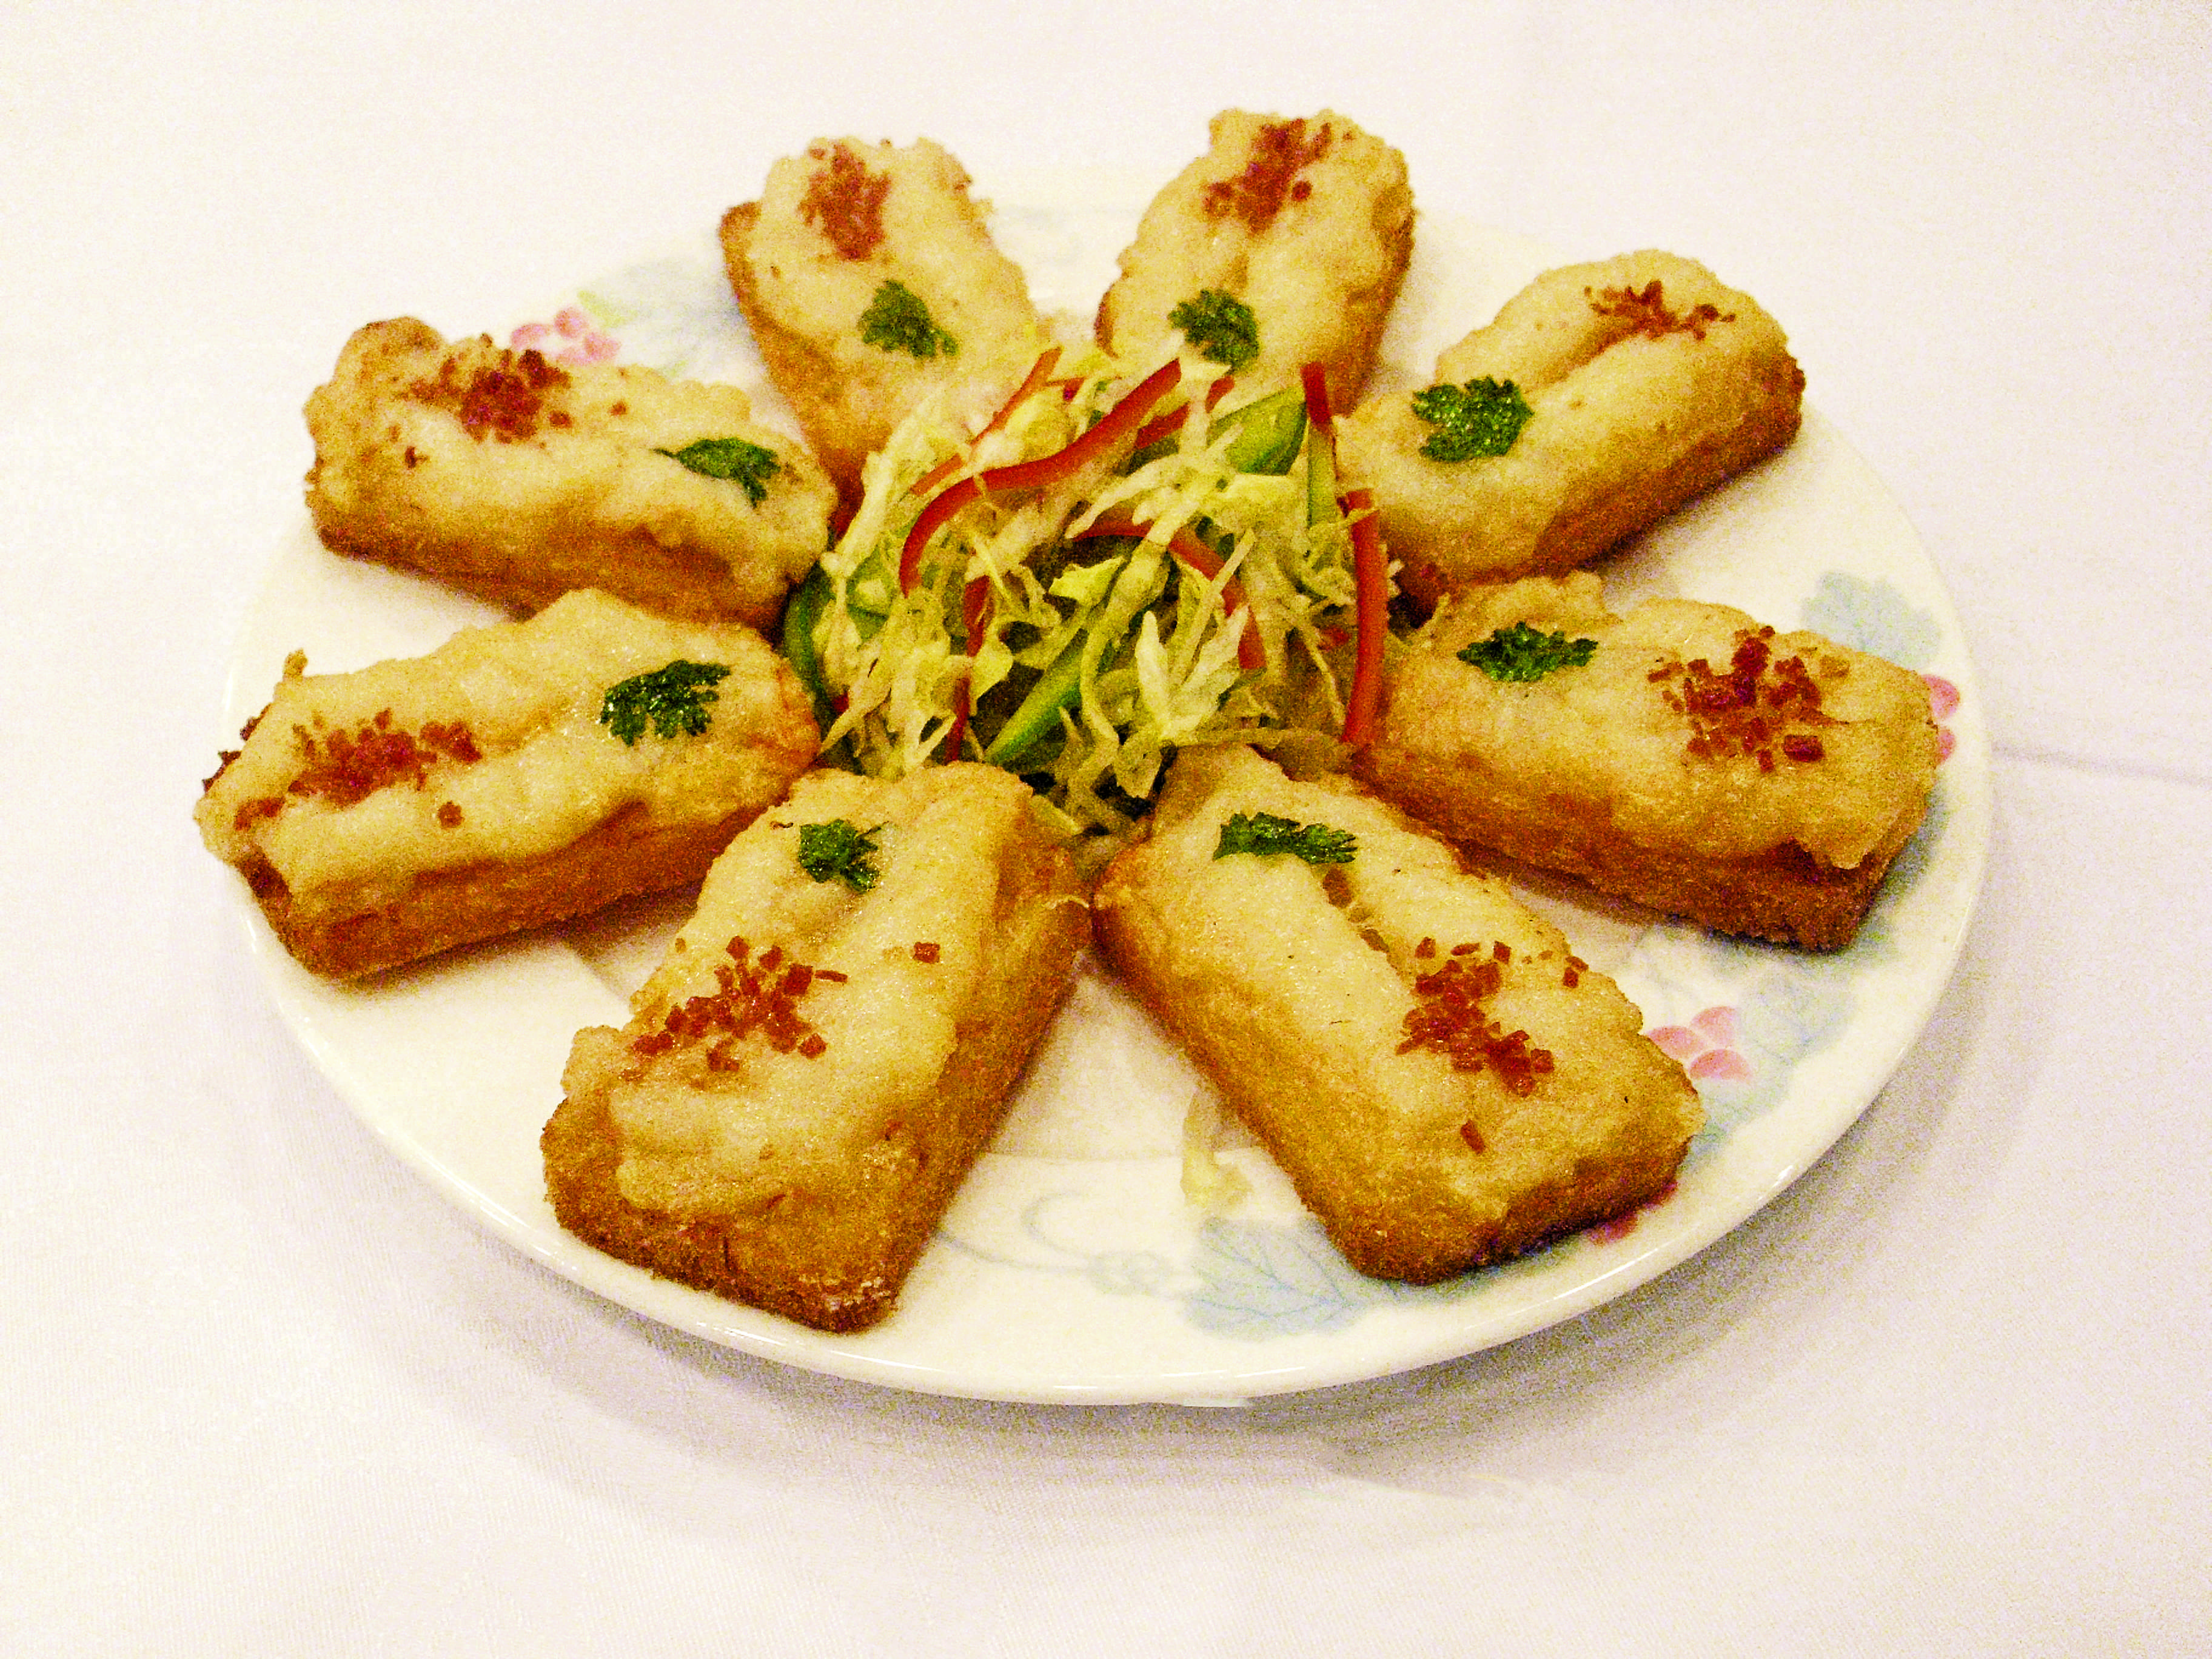 Fried shrimp toast at Fung Shing Restaurant, Prince Edward.